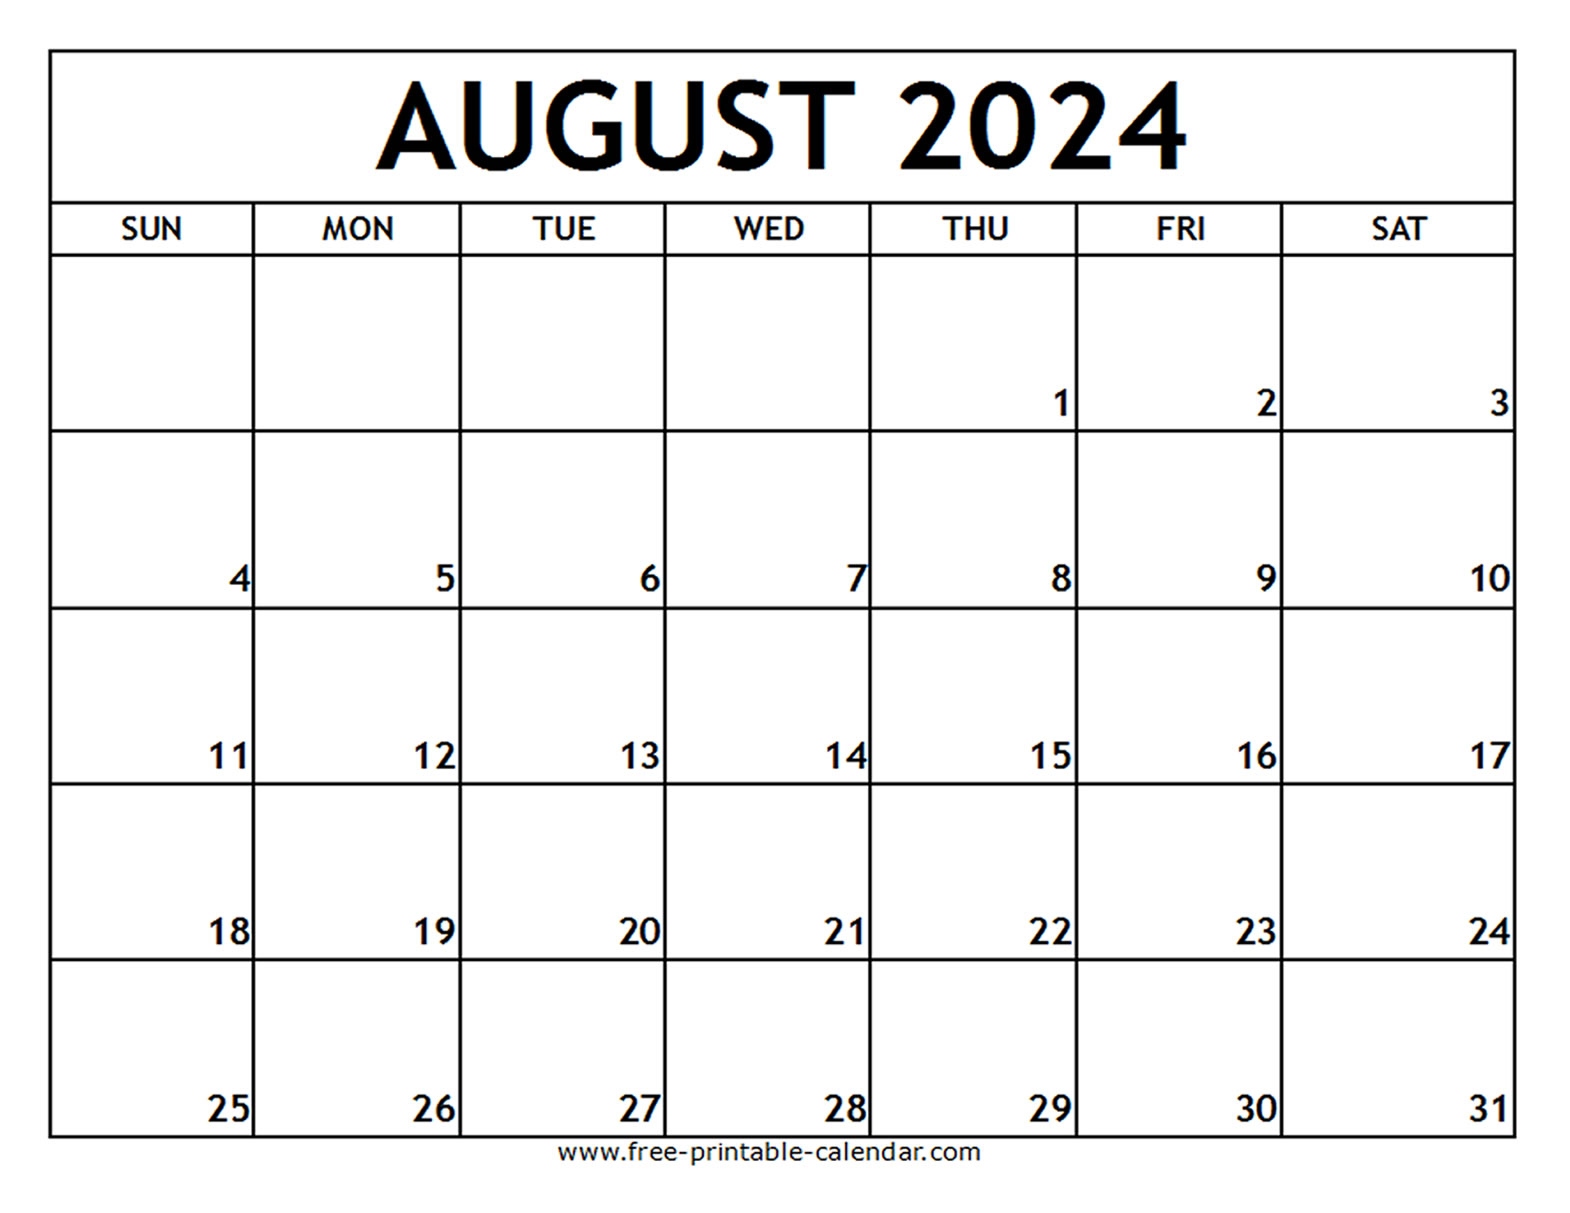 August 2024 Printable Calendar - Free-Printable-Calendar within Free Printable Calendar August 2024